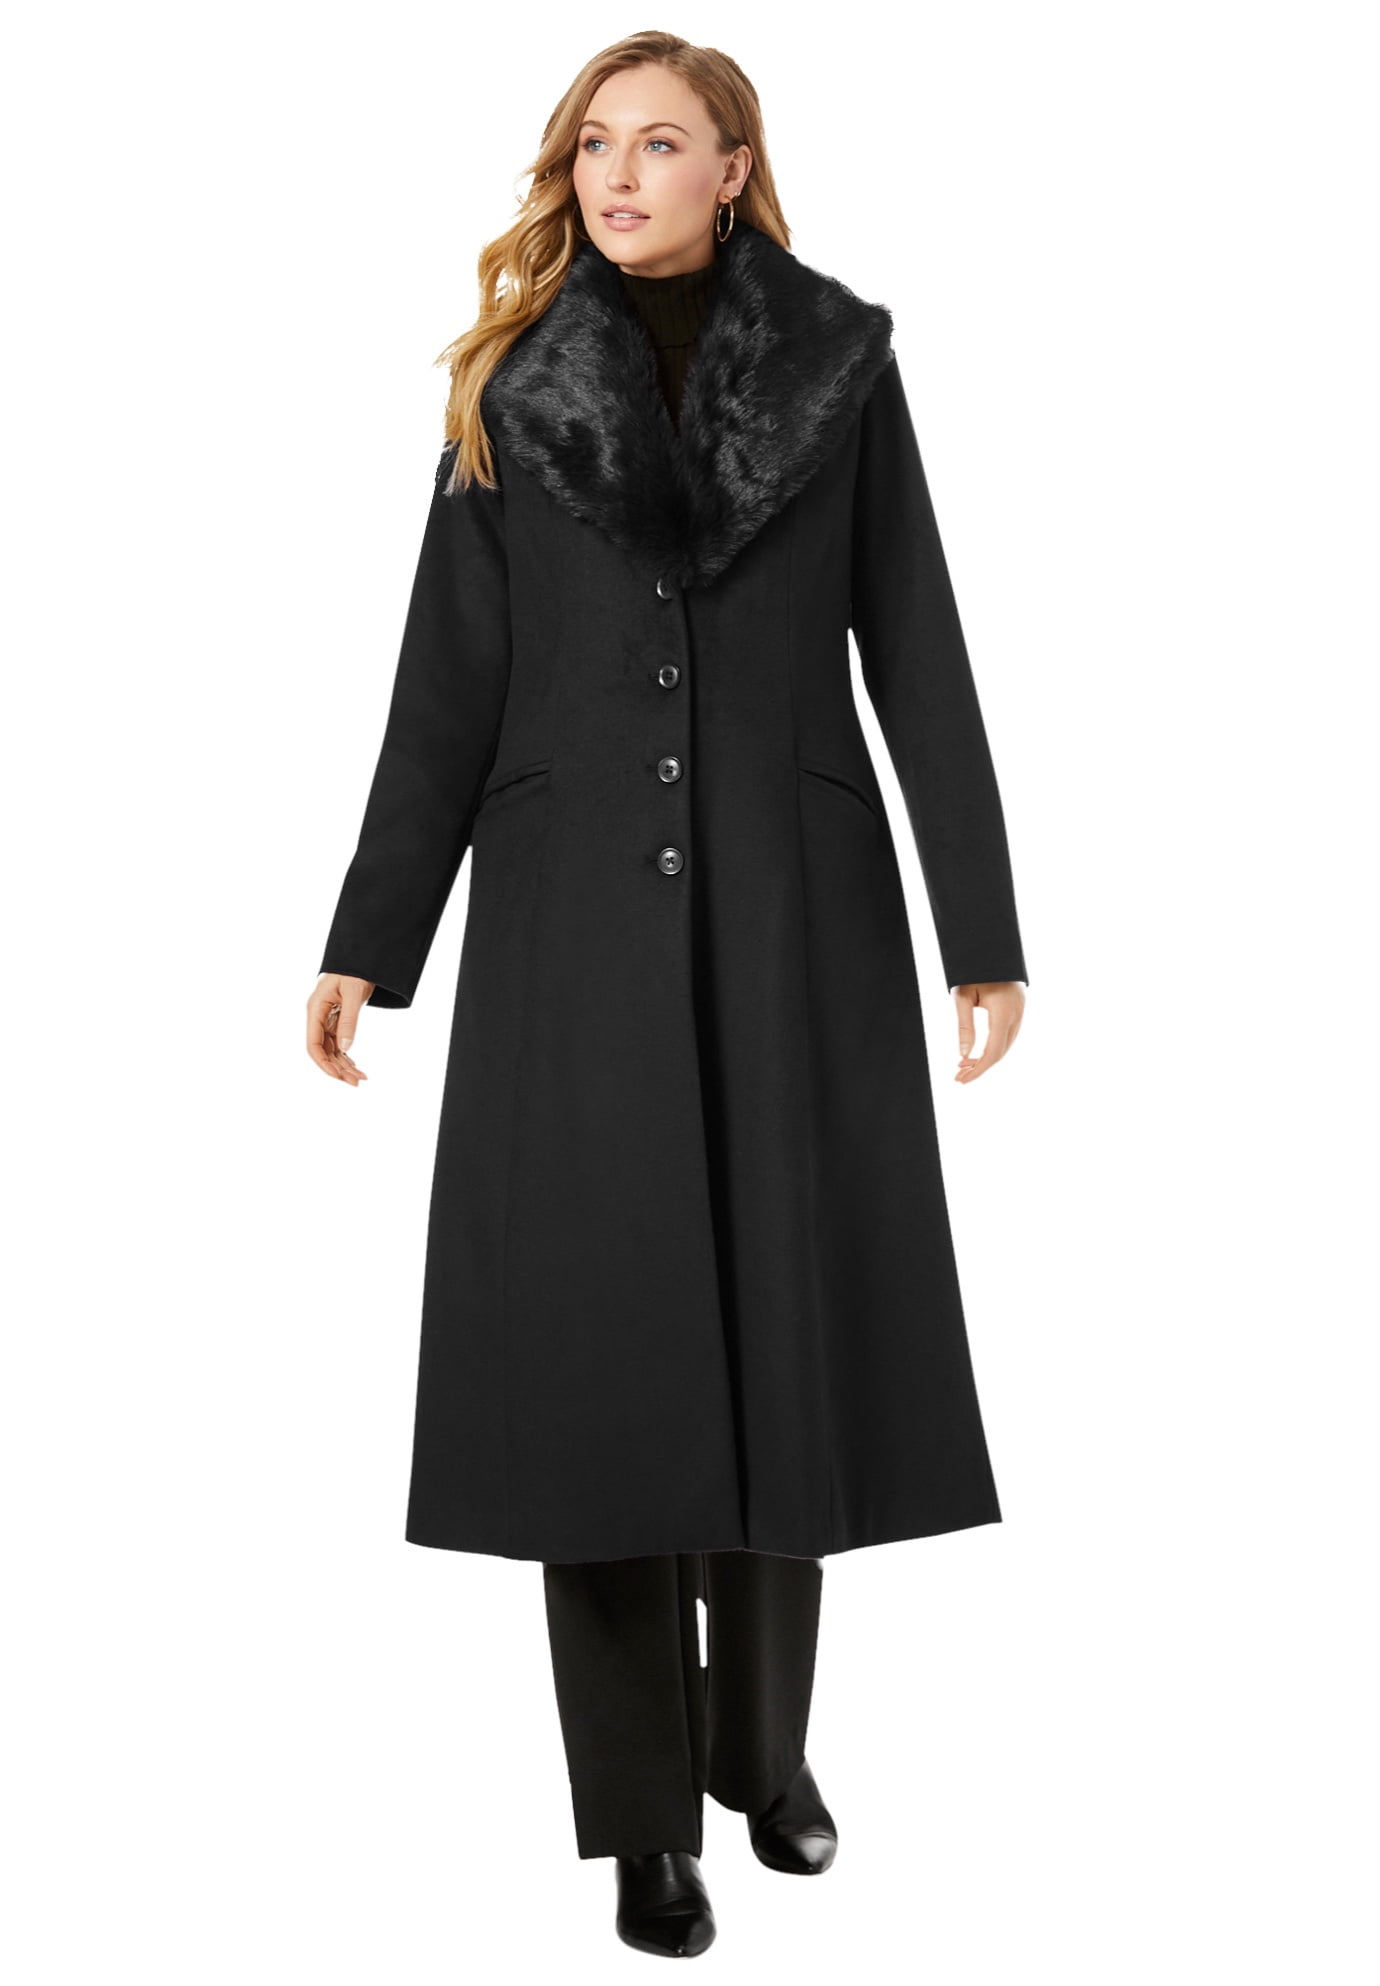 Jessica London Women's Plus Size Long Wool-Blend Coat With Faux Fur Collar  Coat